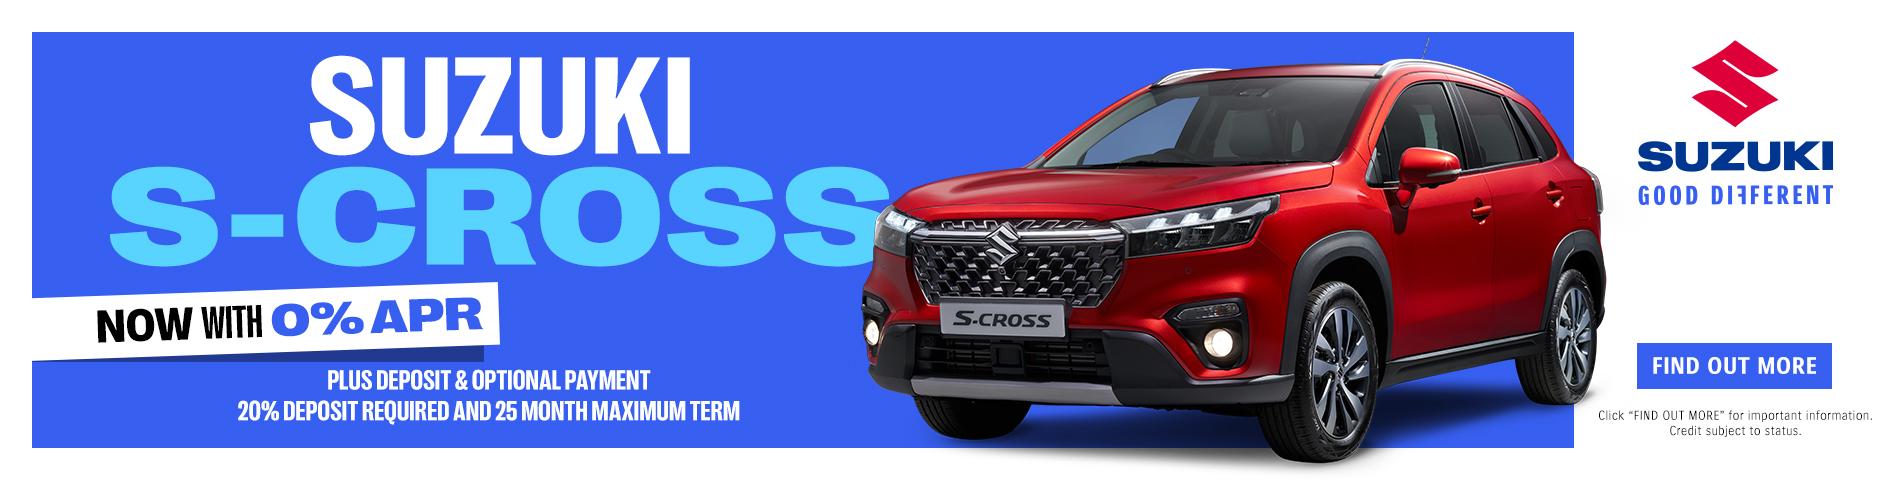 New Suzuki S-Cross Motion 0% APR Offer